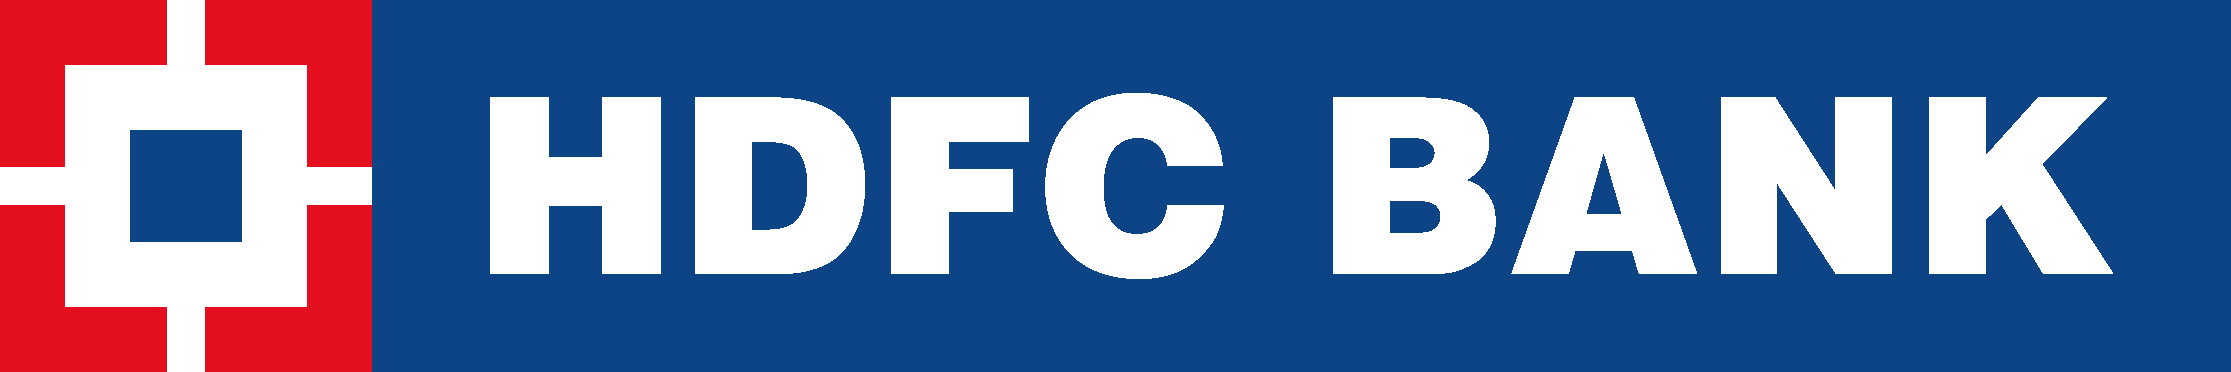 HDFC Bank Logo png